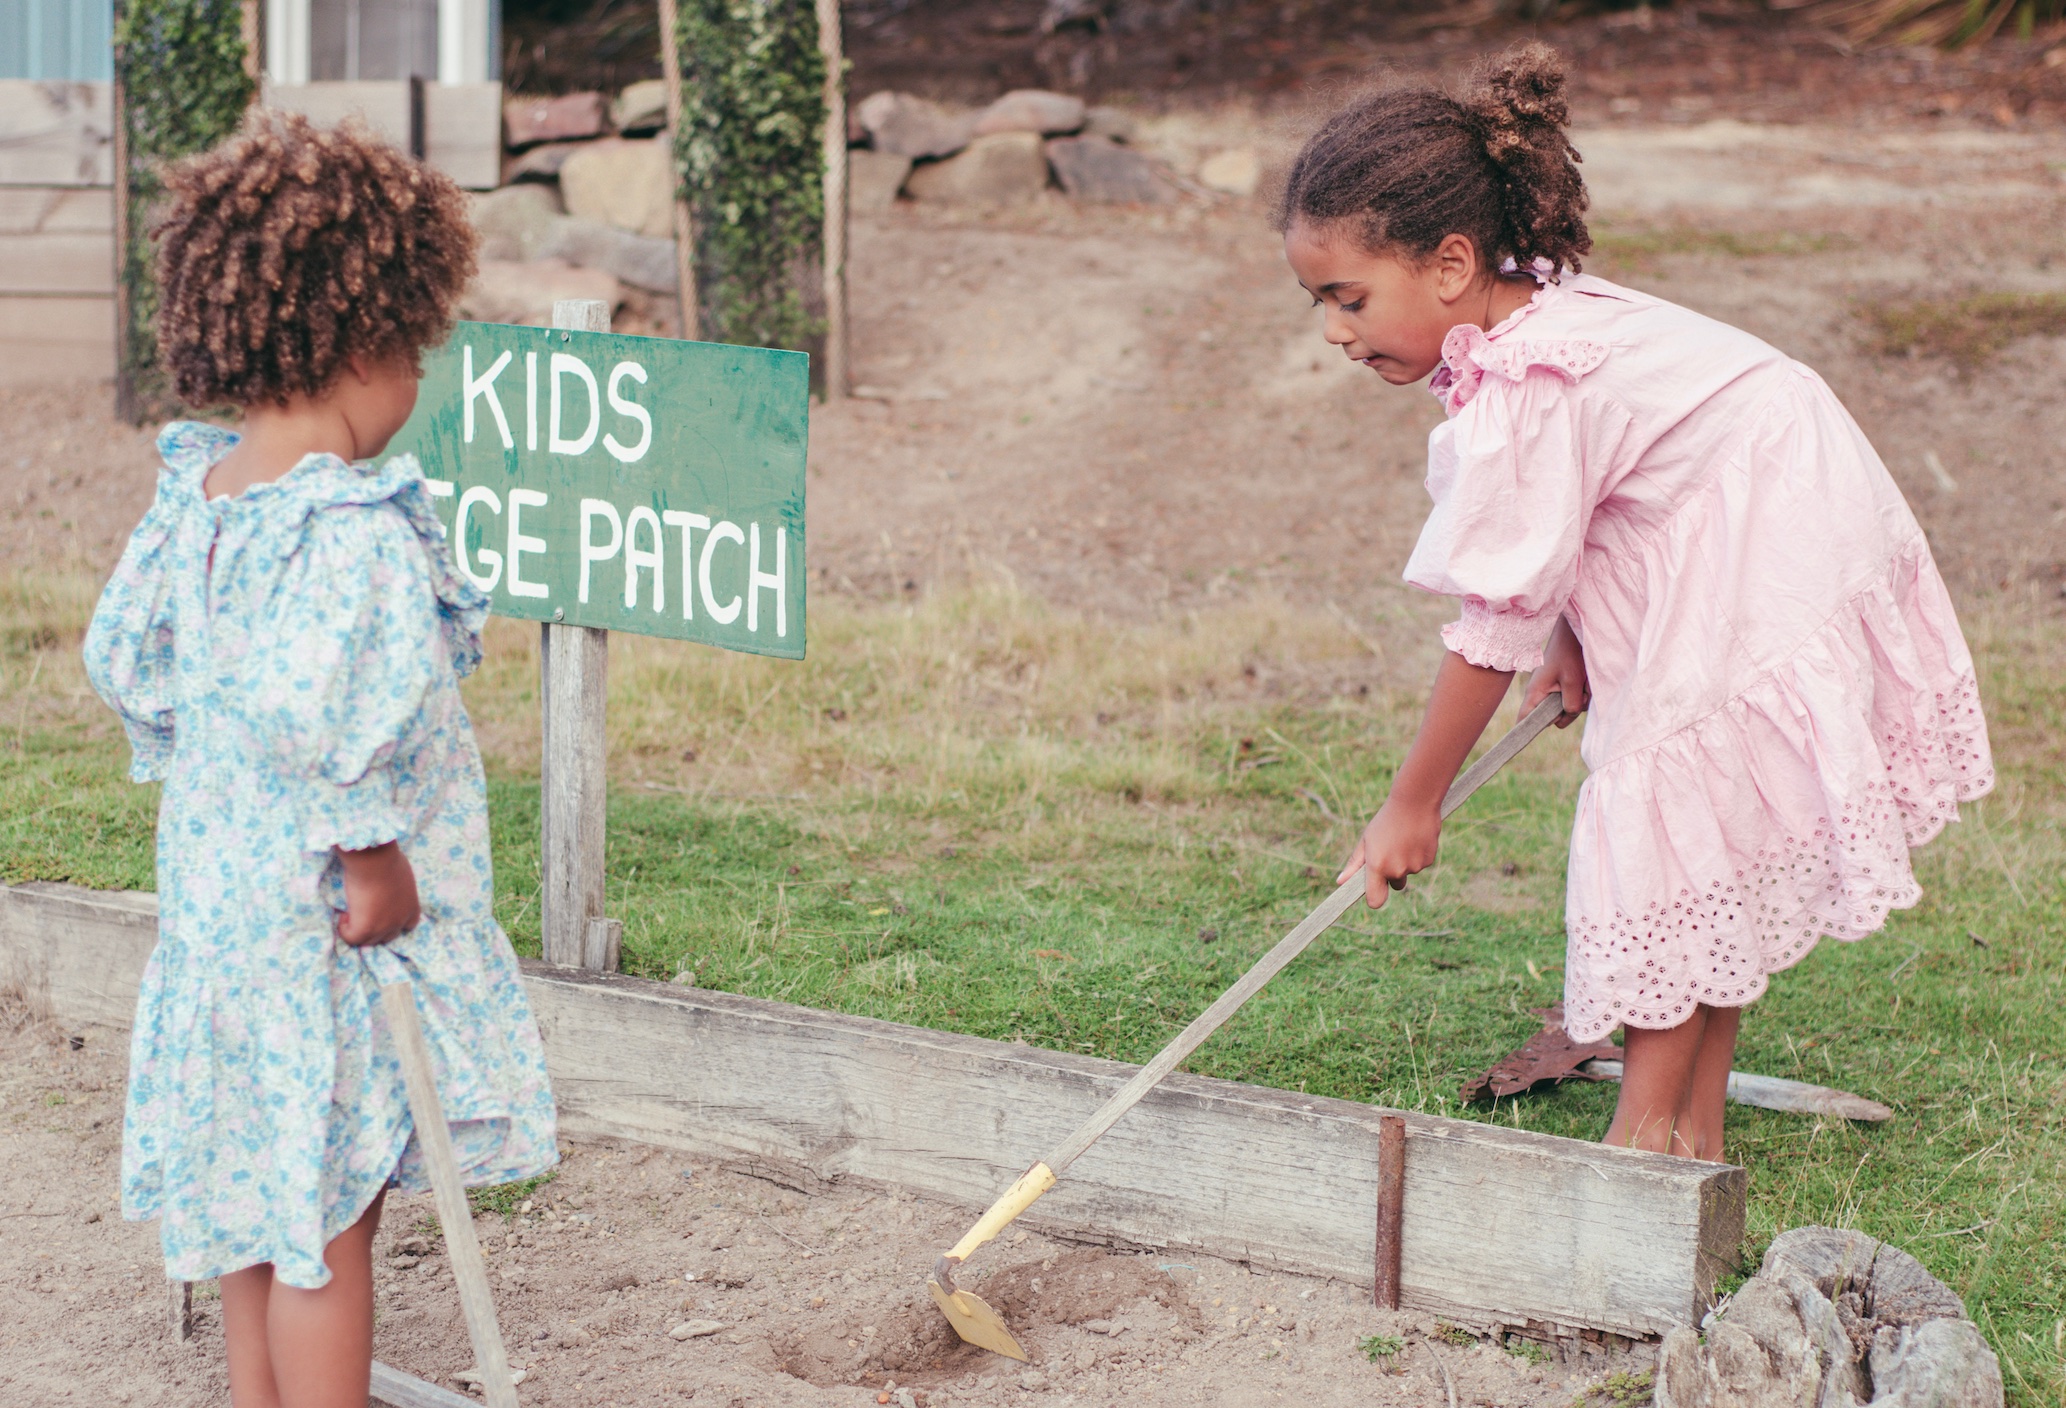 Two little girls tending a kids garden patch; image by Mieke Campbell, via Unsplash.com.